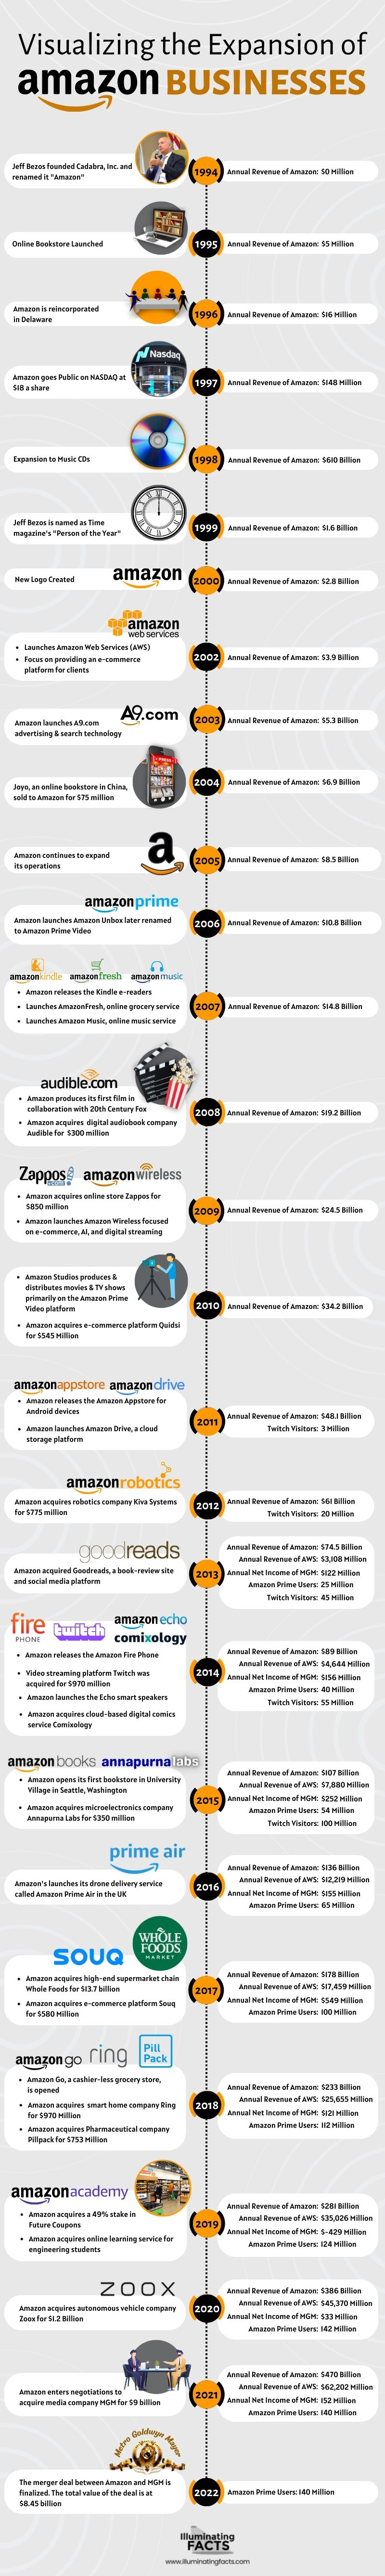 Visualizing the Expansion of Amazon Businesses